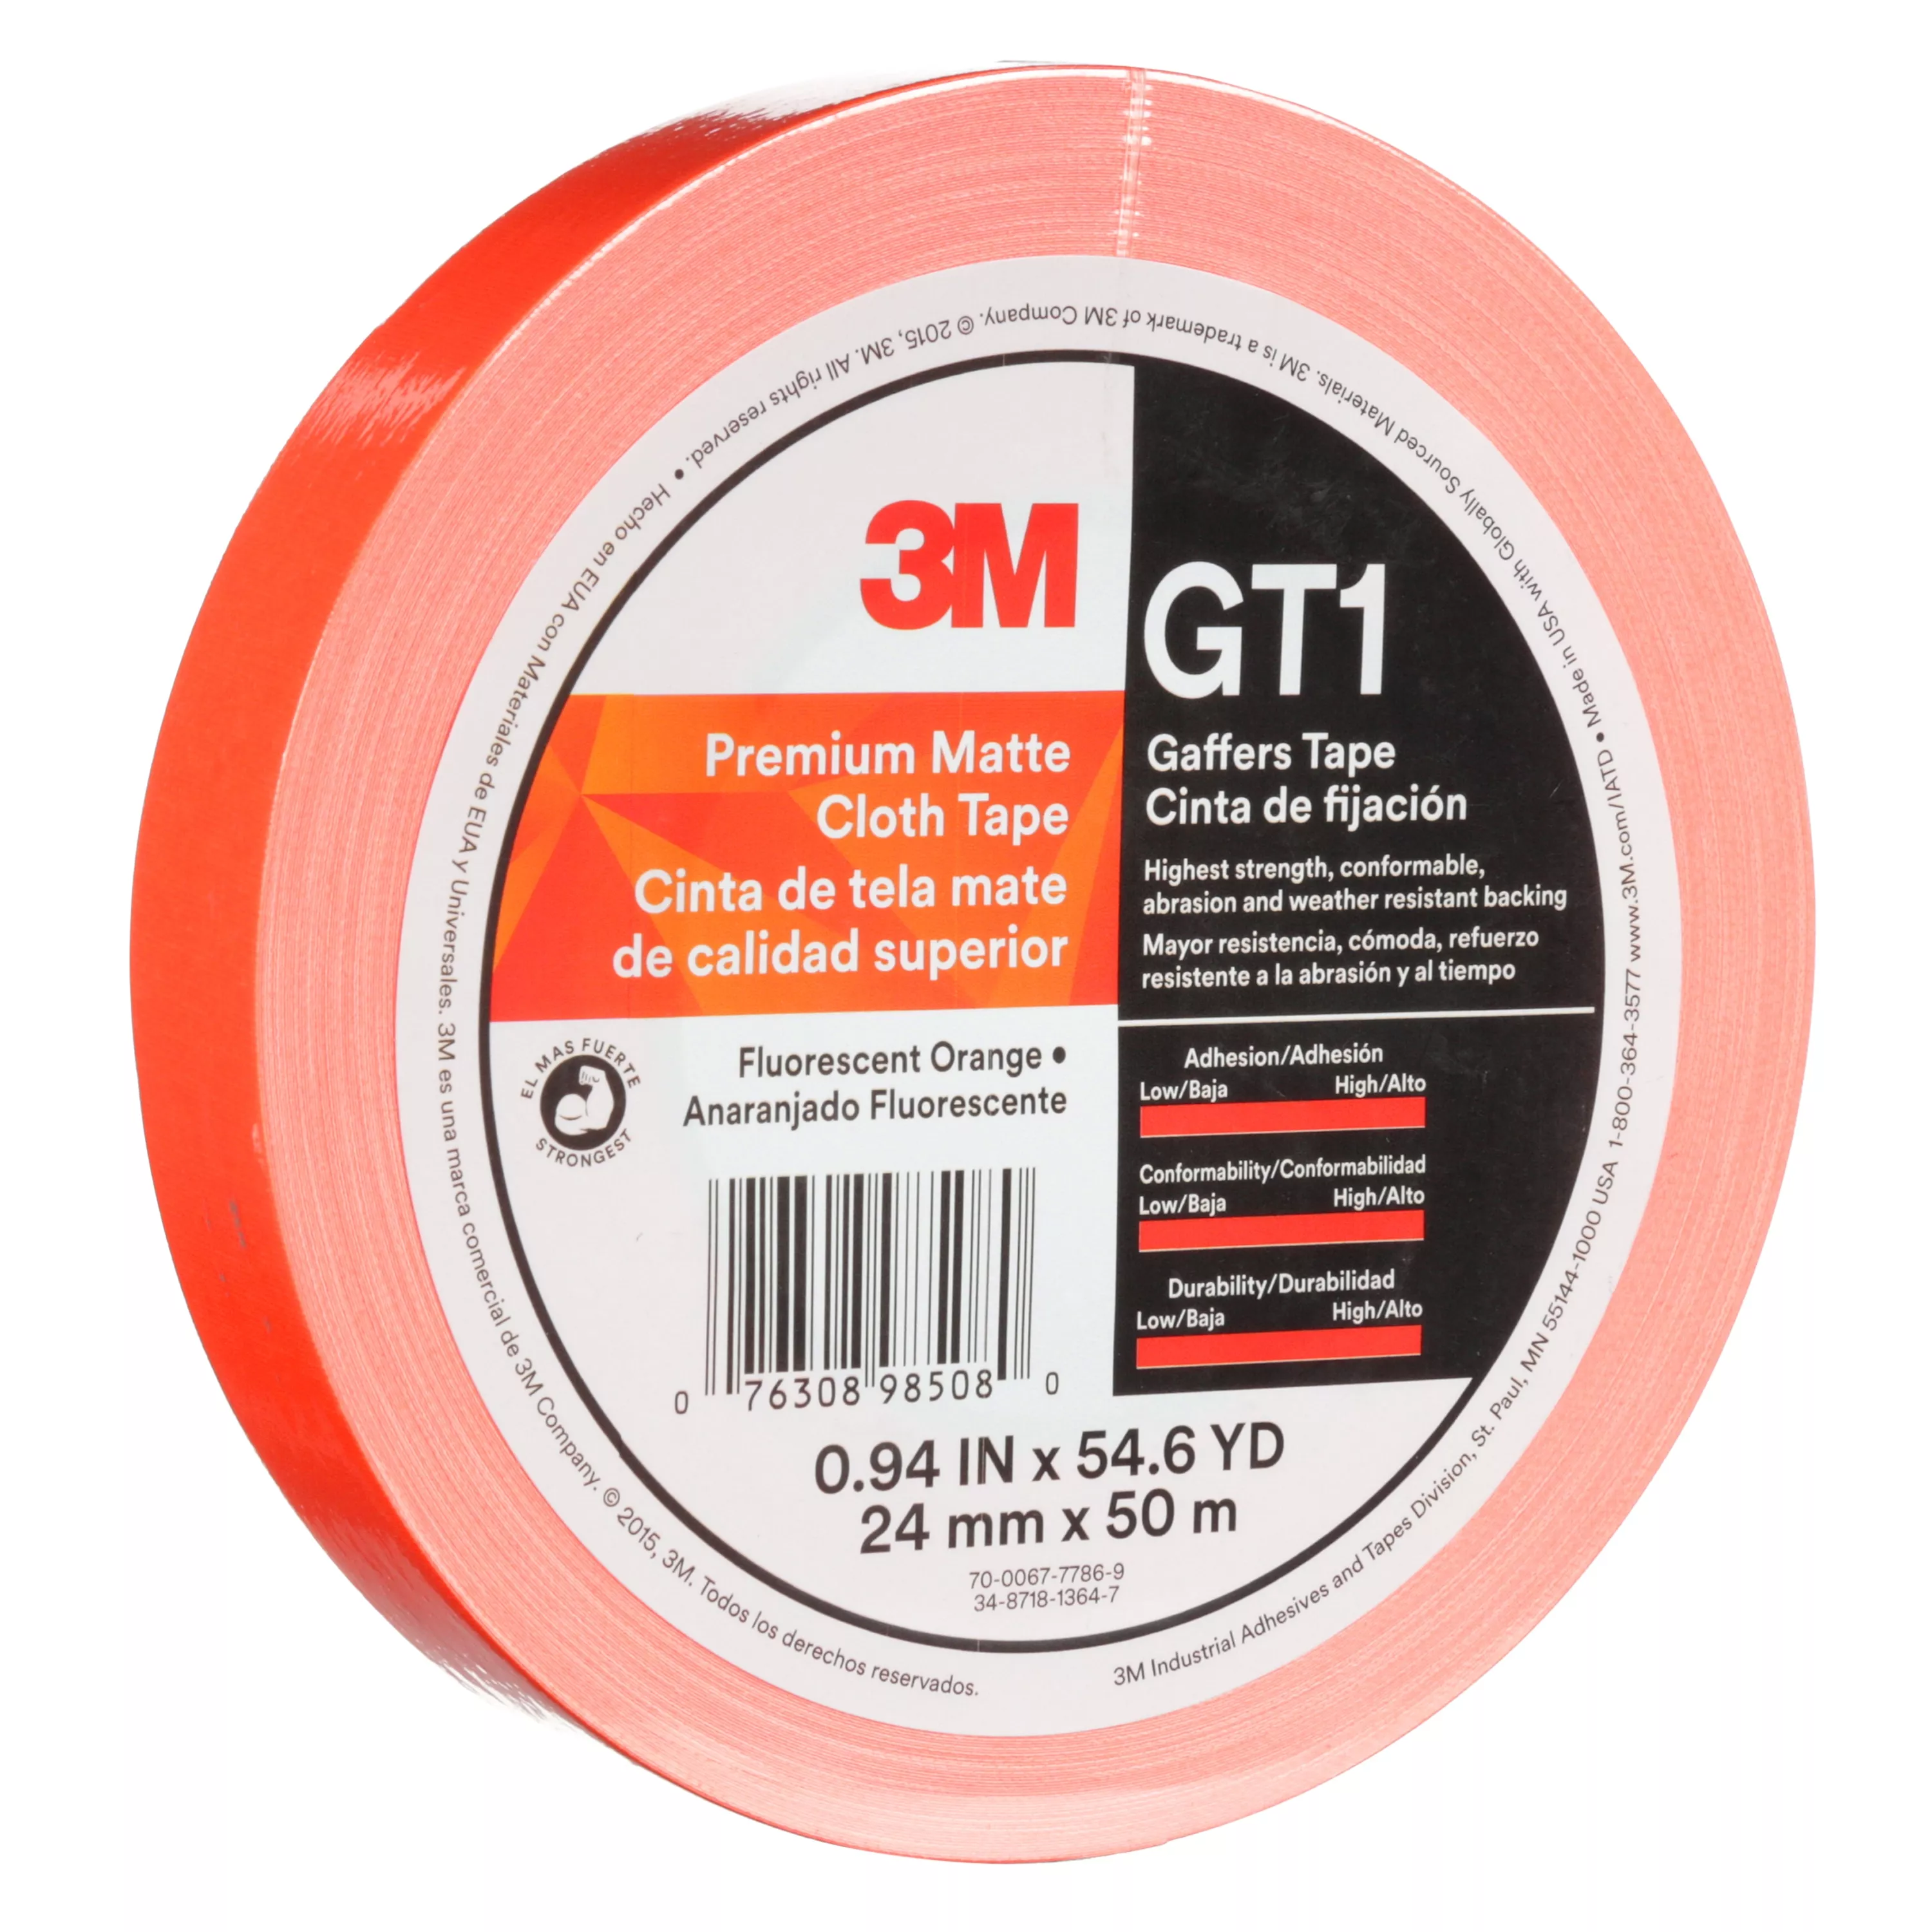 3M™ Premium Matte Cloth (Gaffers) Tape GT1, Fluorescent Orange, 24 mm x
50 m, 11 mil, 48/Case